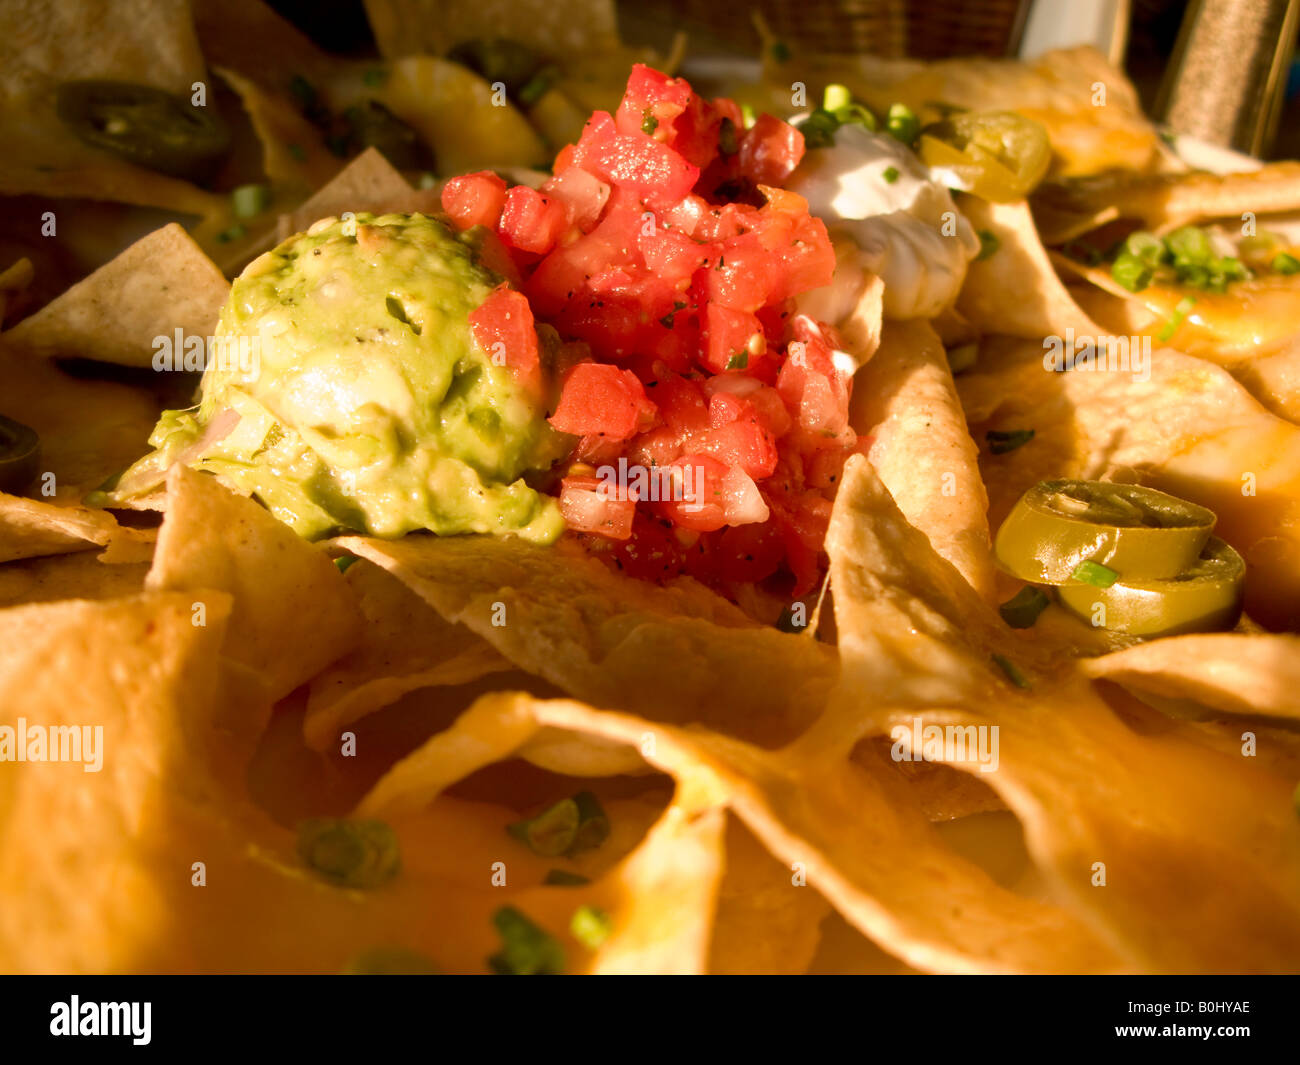 Plate with nachos Stock Photo